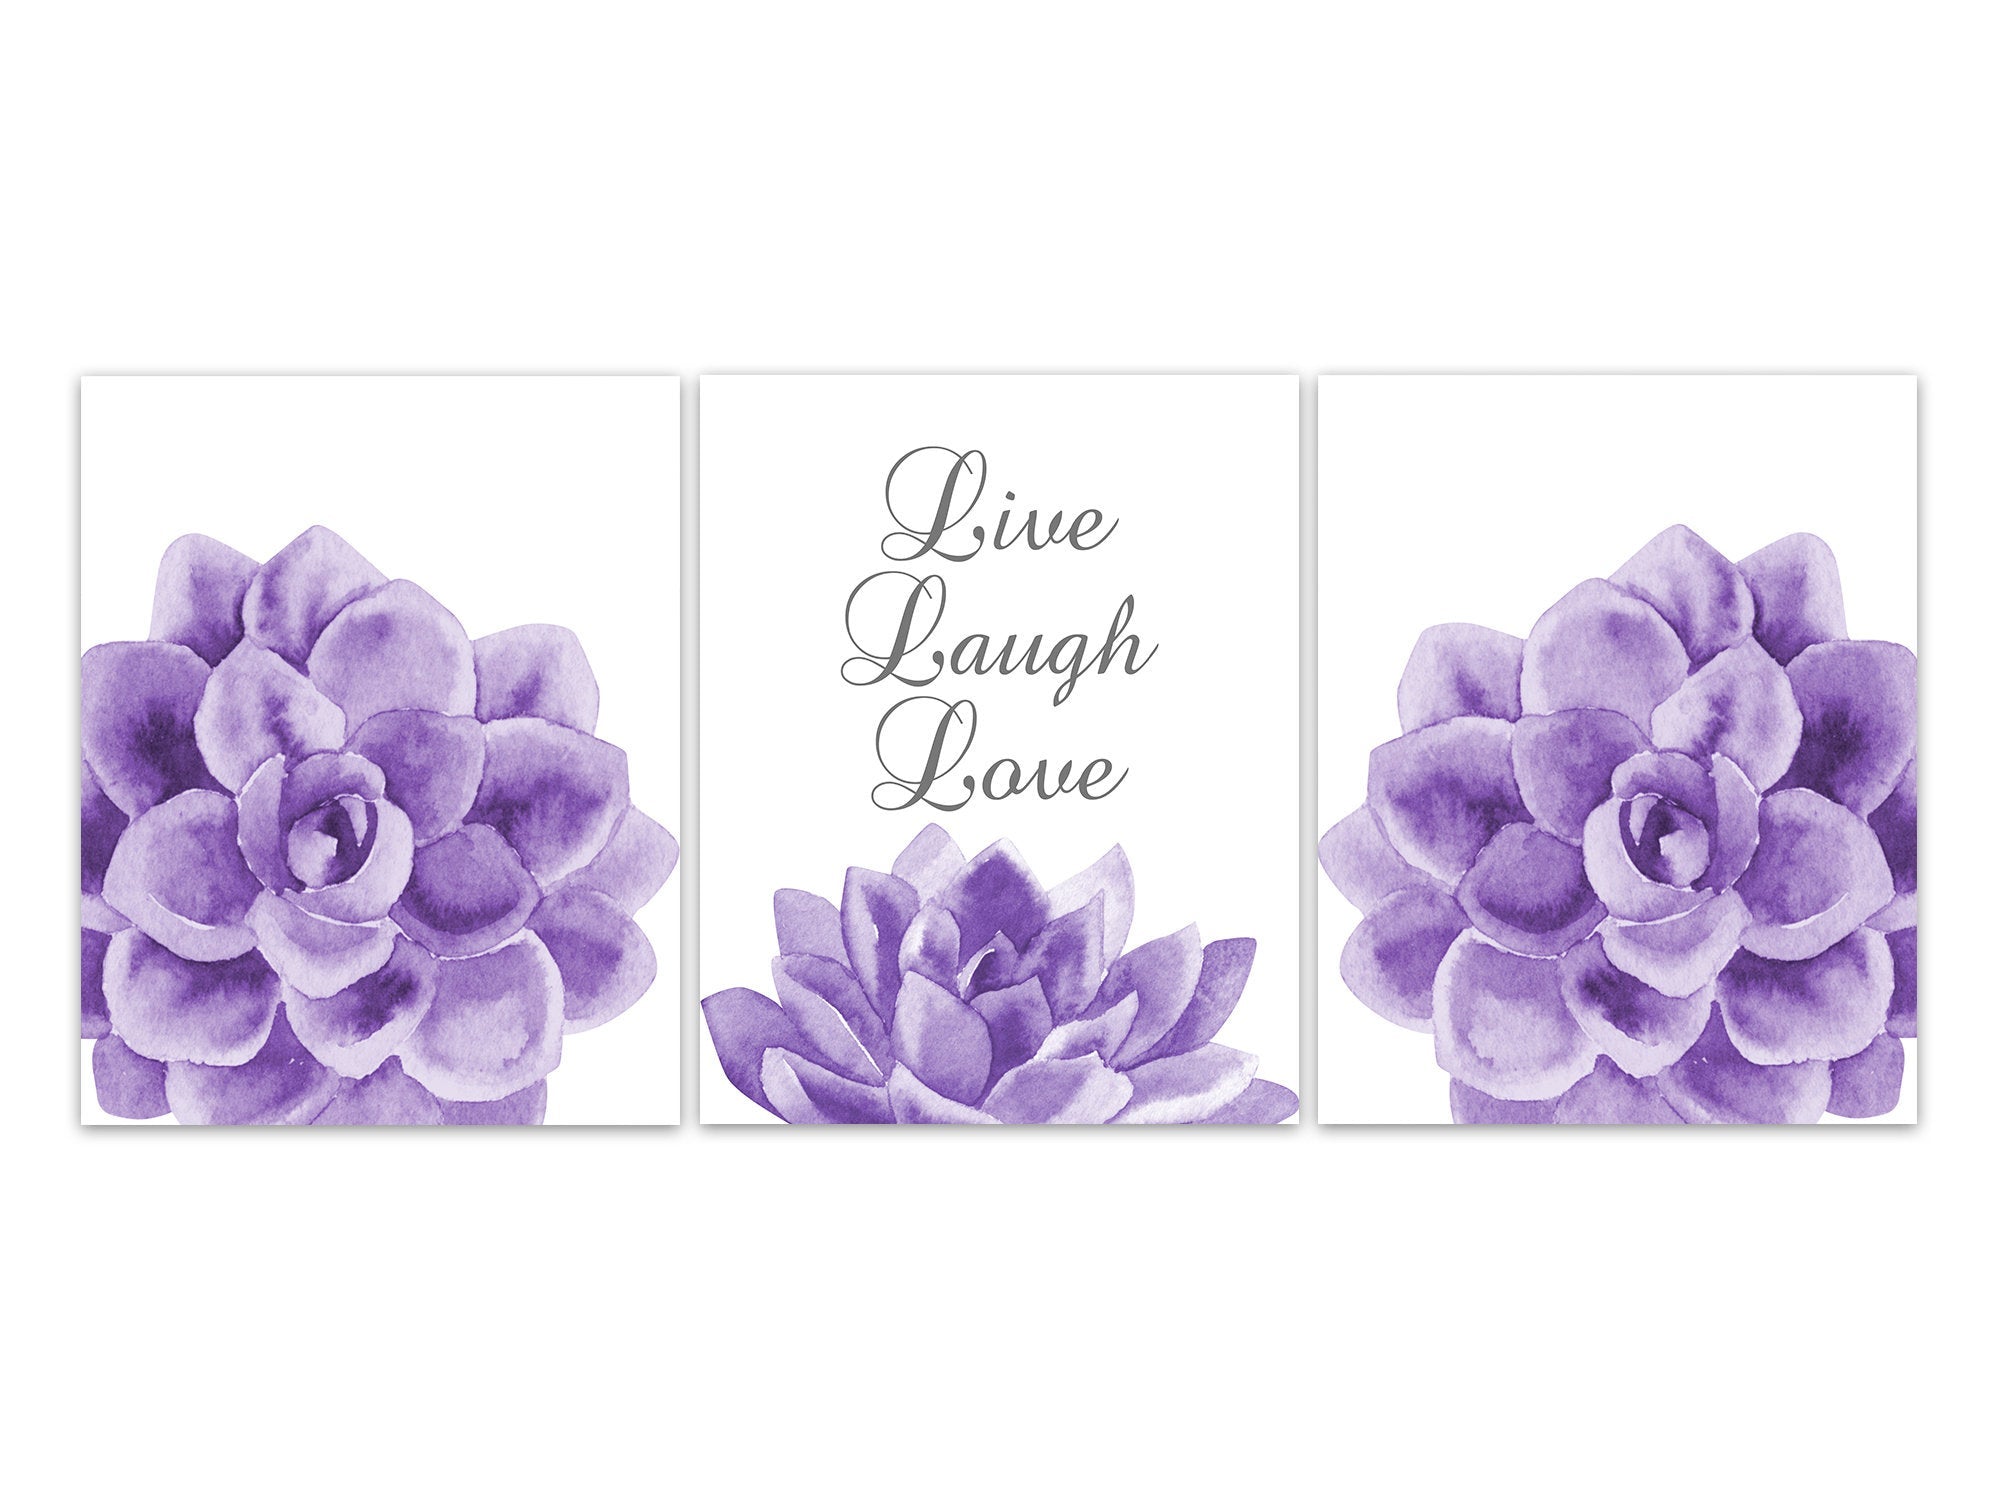 Live Laugh Love, Purple Succulent Art, Purple Home Decor, Bathroom Wall Decor, Bedroom Wall Art, Nursery Wall Art, Wall Hangings - HOME596